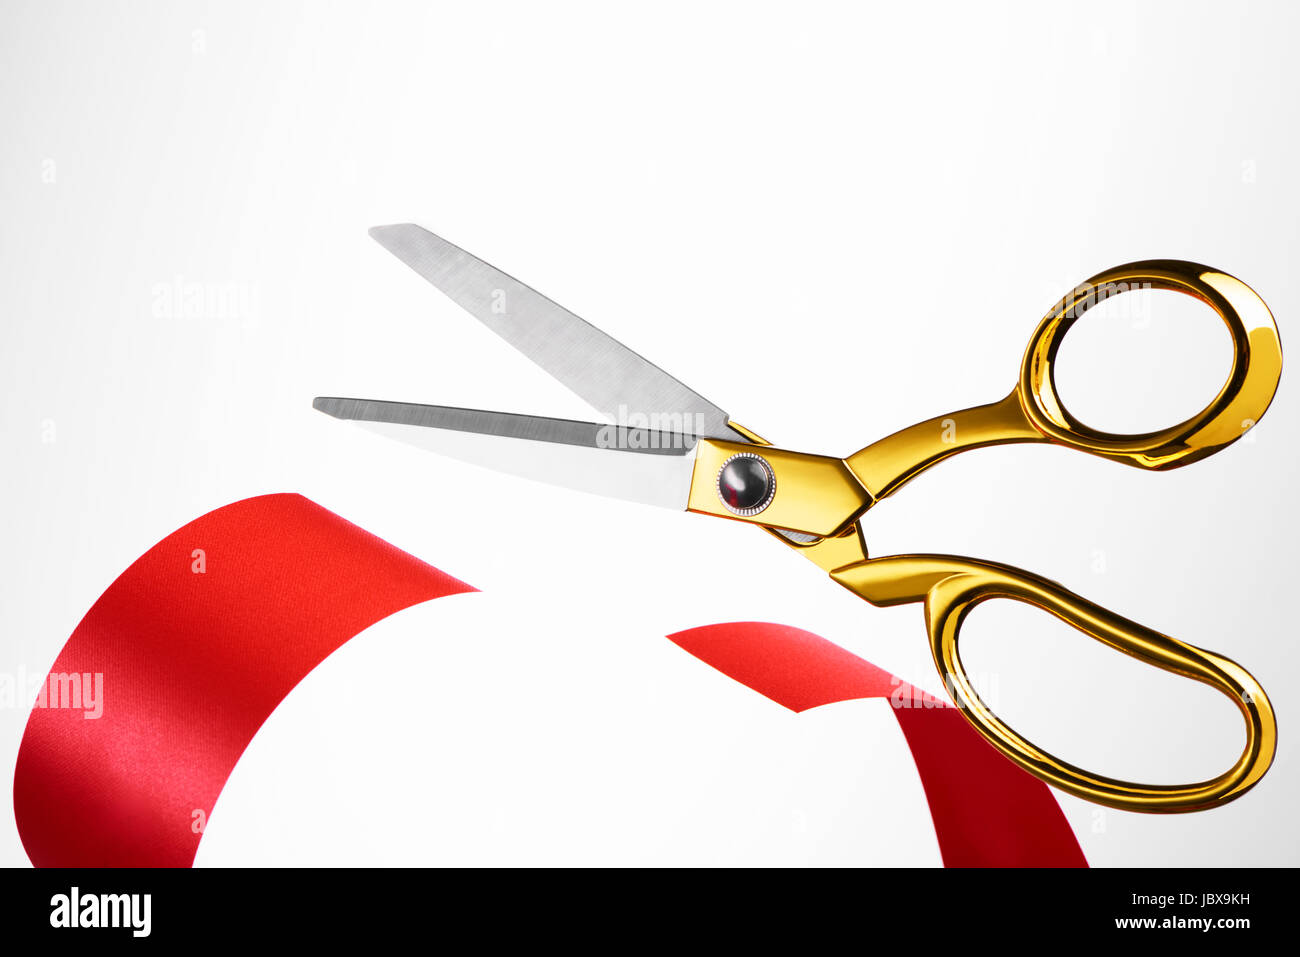 Golden scissors cutting red ribbon/ tape Stock Photo